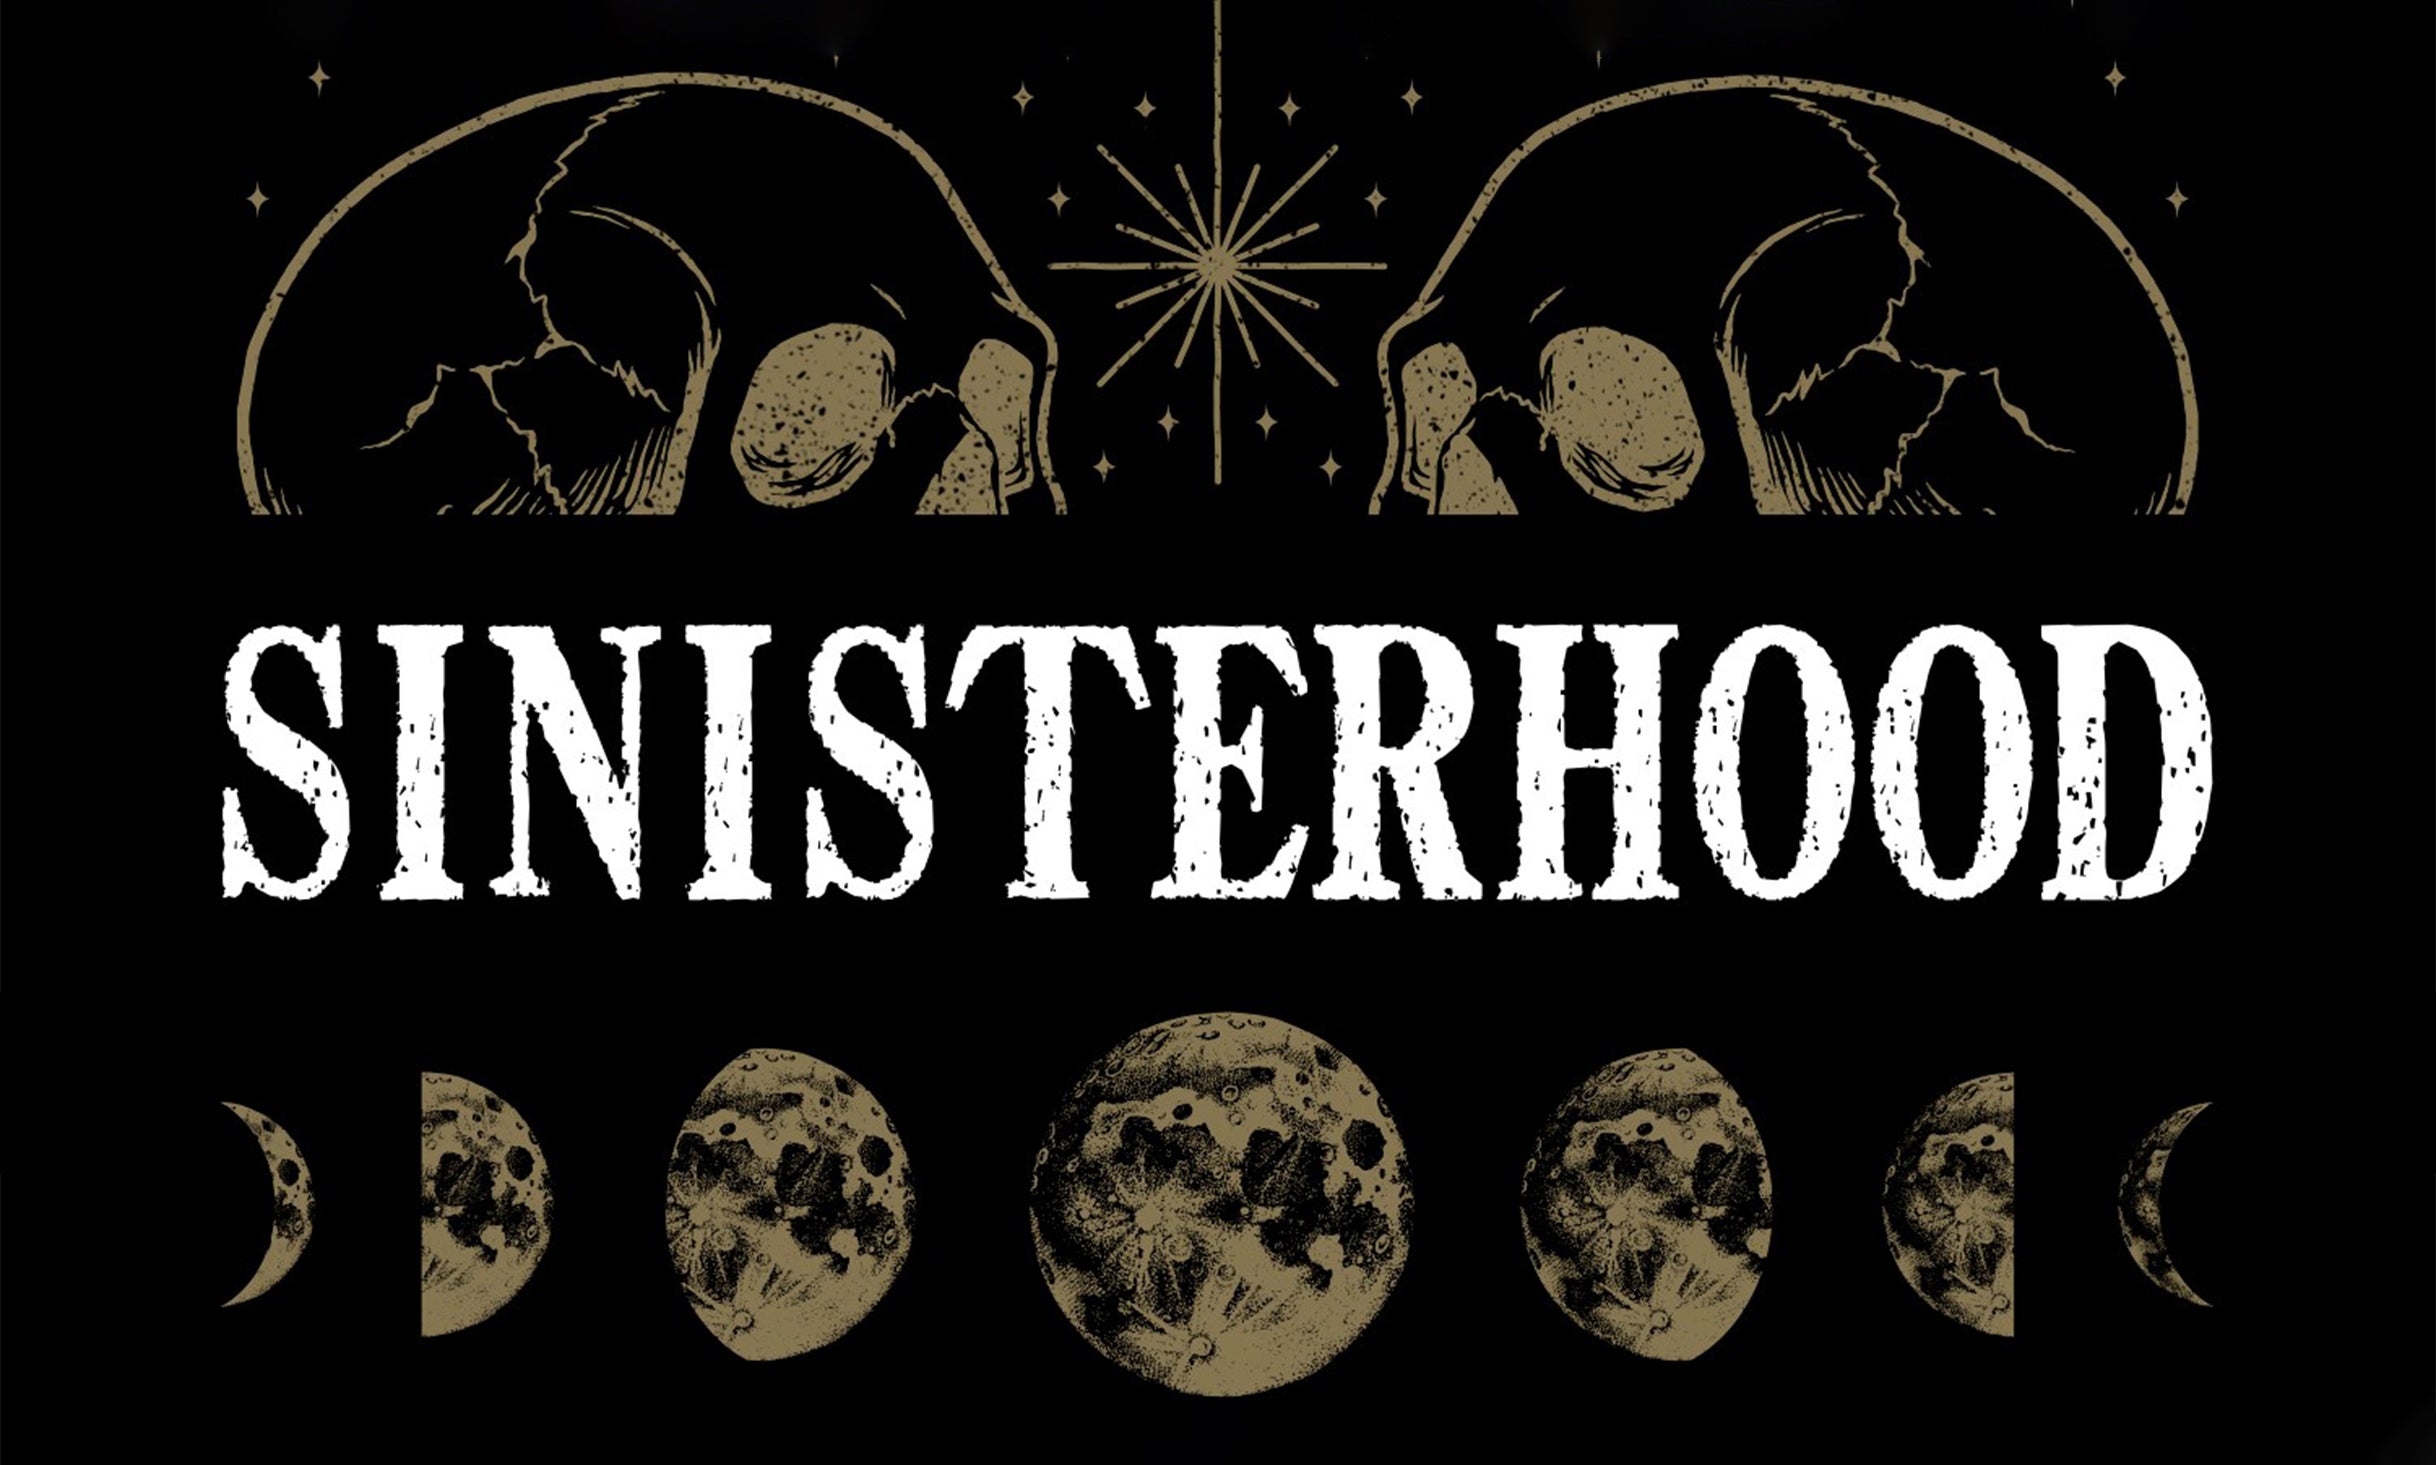 Sinisterhood: Full Moon Energy Tour in San Francisco promo photo for Patreon presale offer code